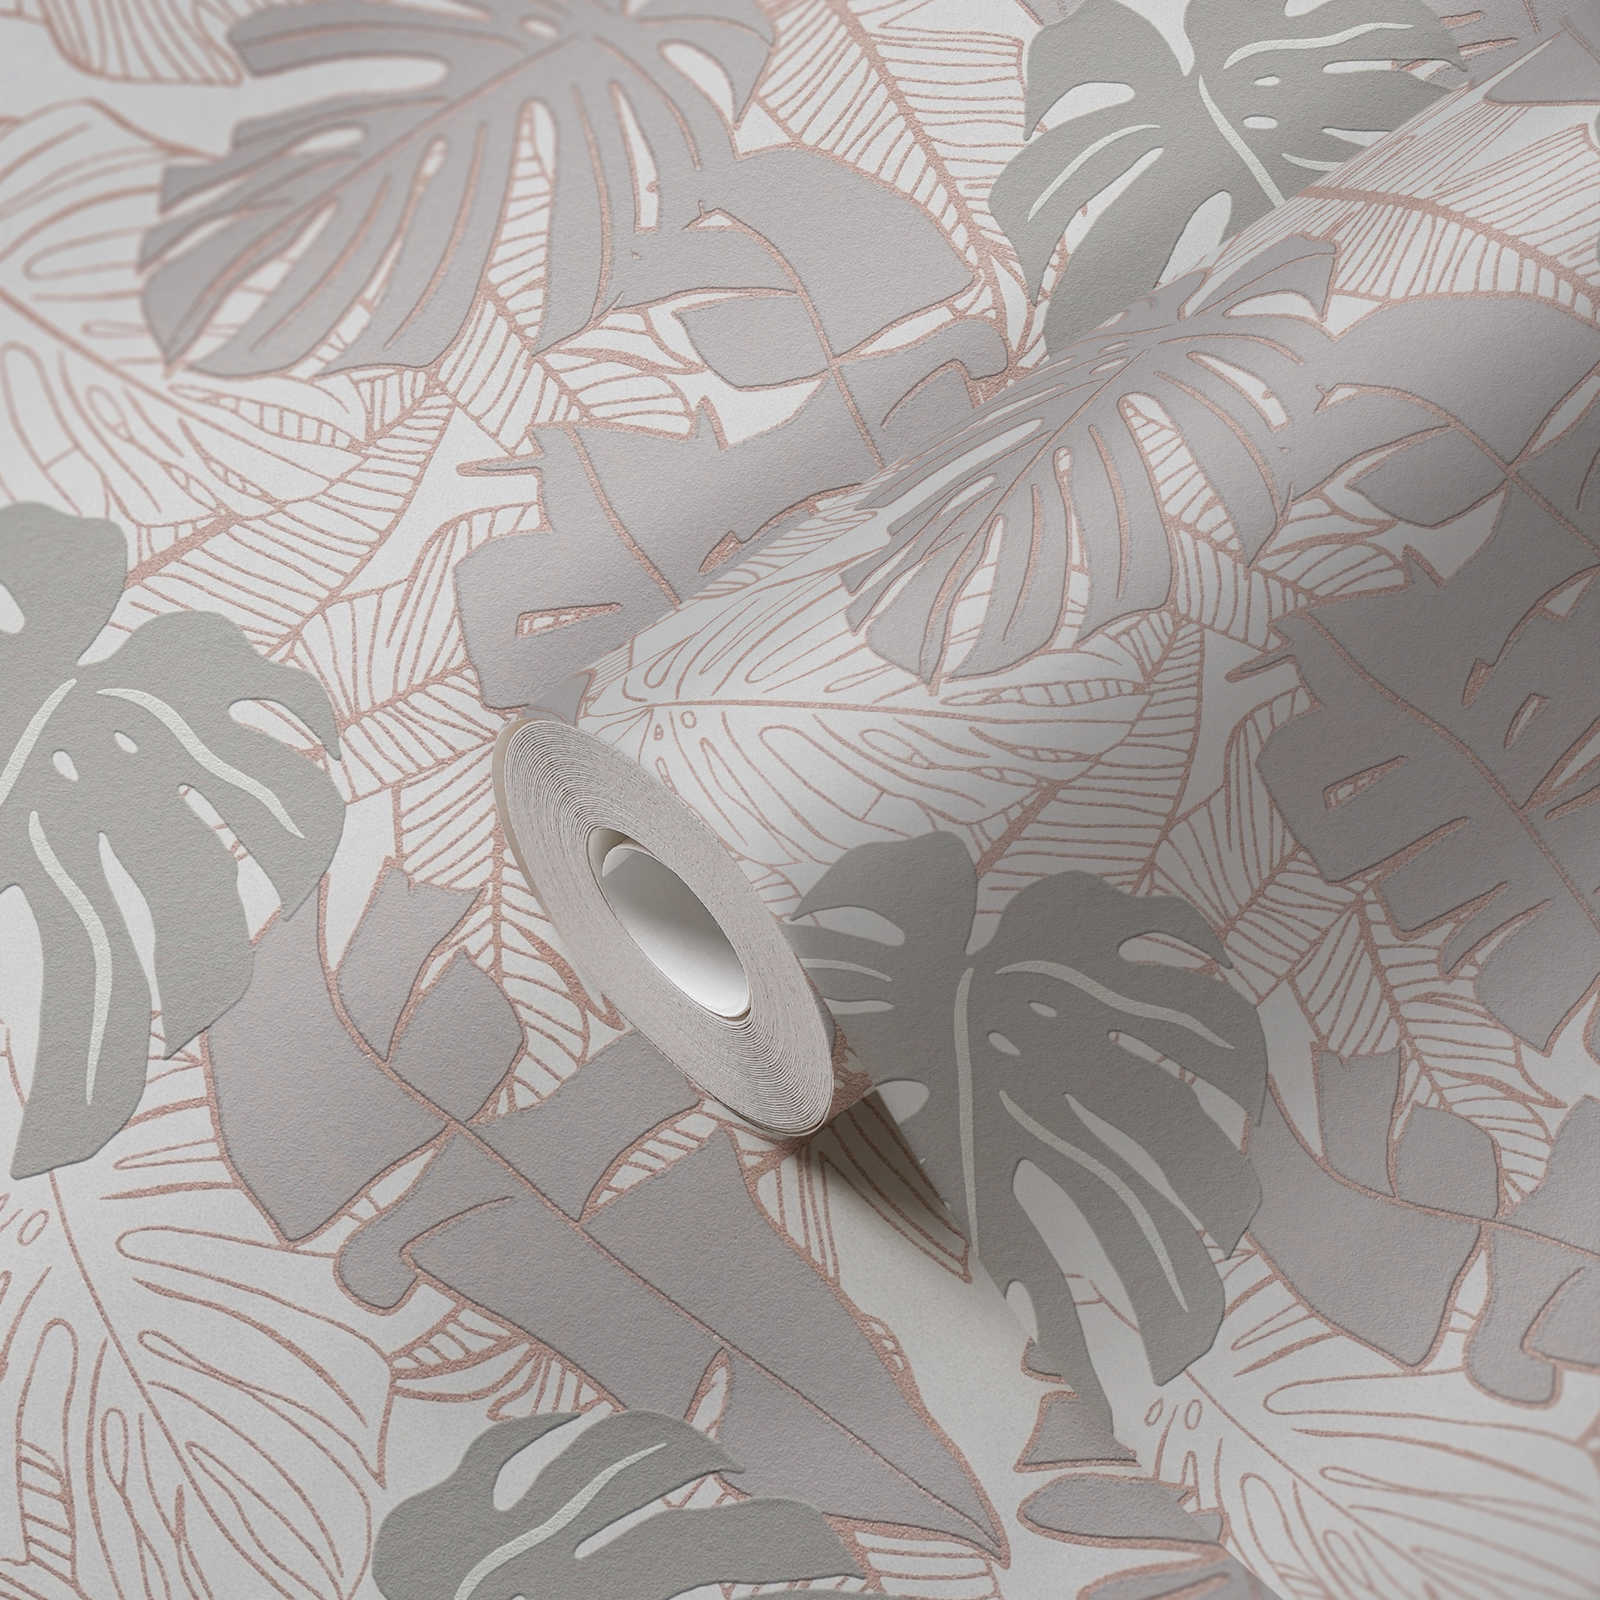             Non-woven wallpaper with banana leaves in jungle look & metallic effect - grey, metallic
        